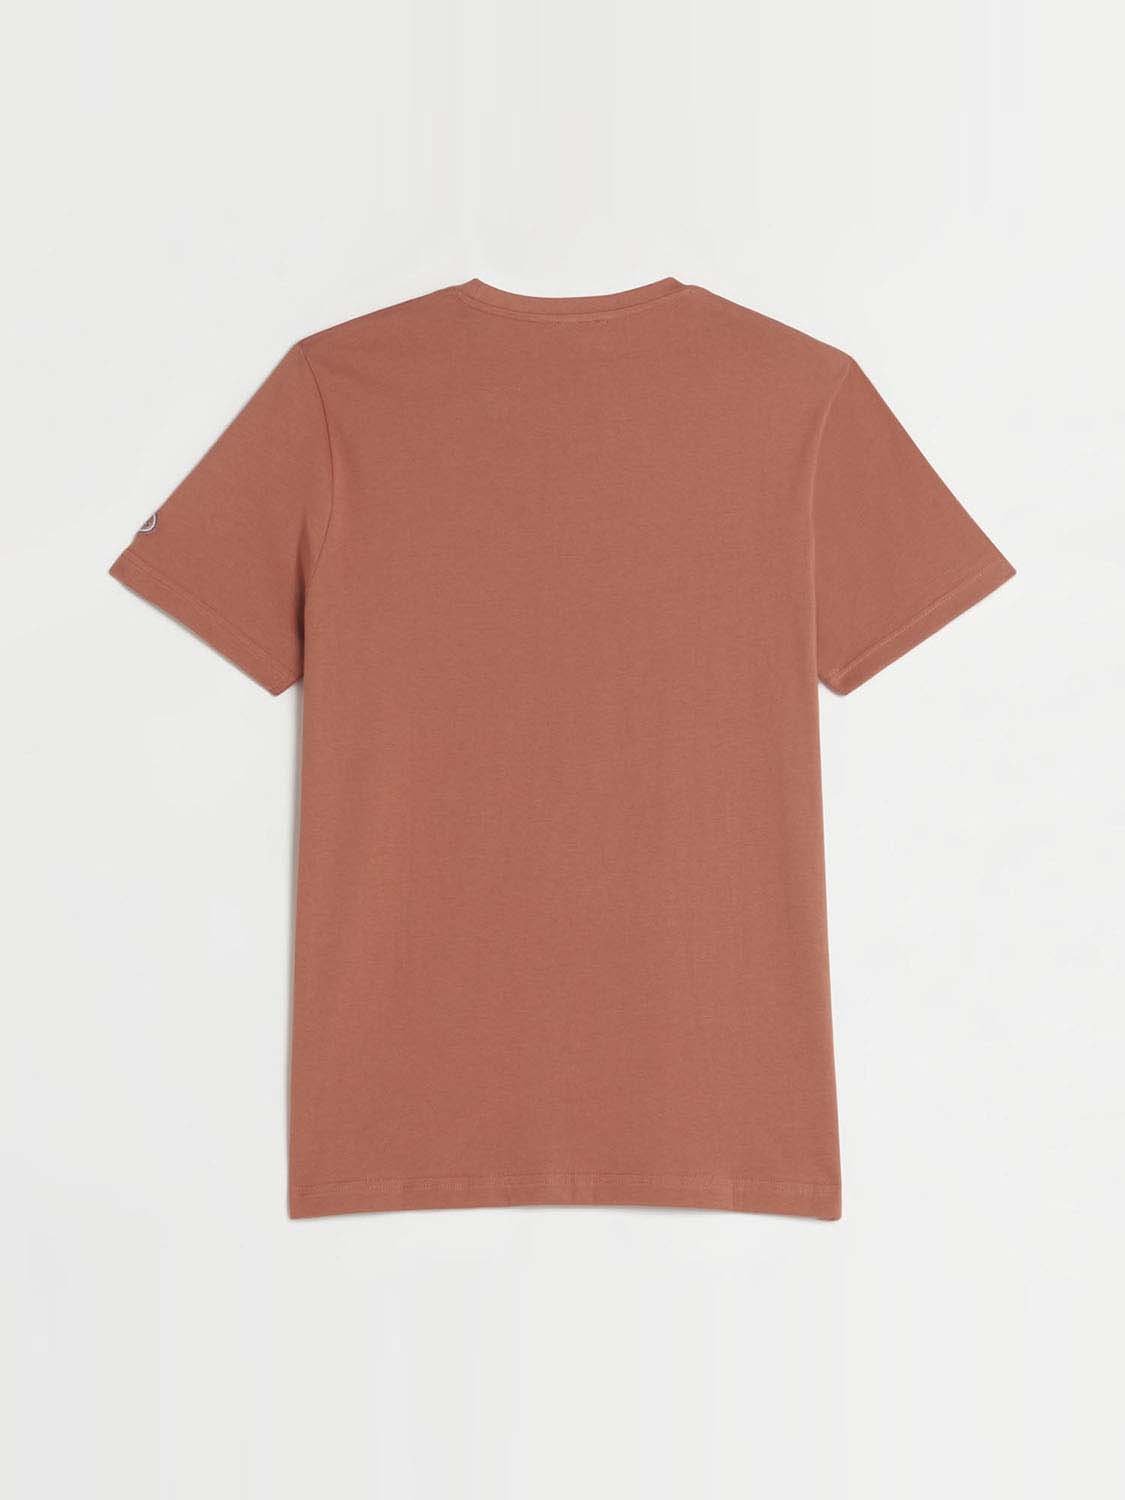 Tee-Shirt Homme Coton Biologique Rayures Orange